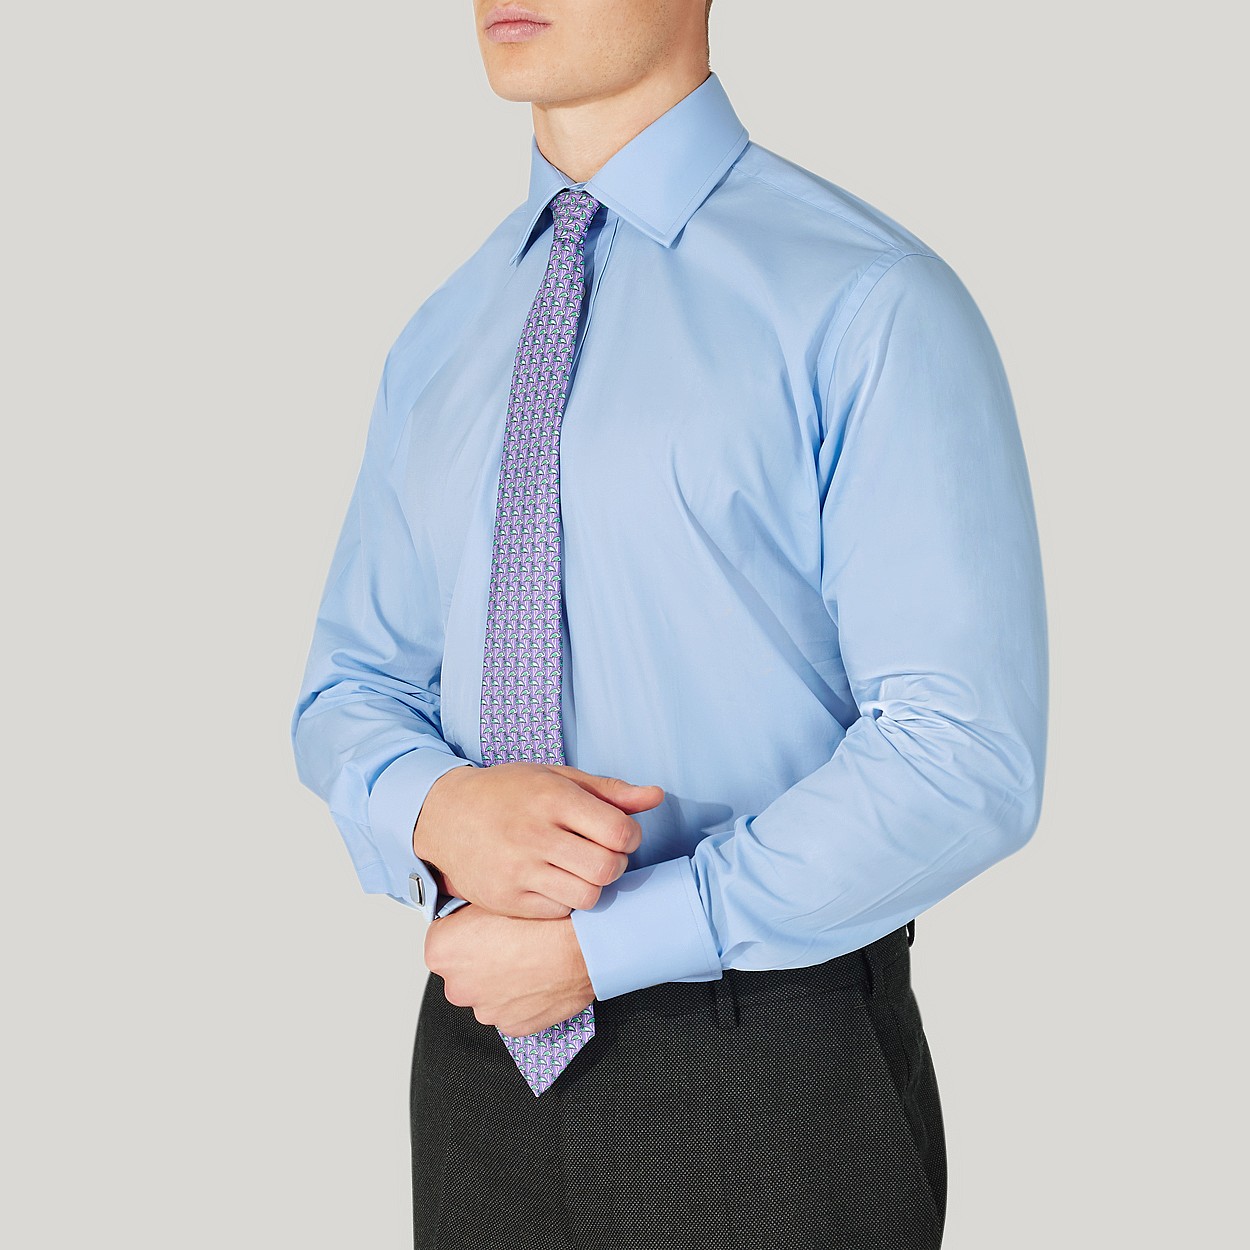 Double Cuff Shirt in a Plain Sky Blue Poplin Cotton Classic Collar